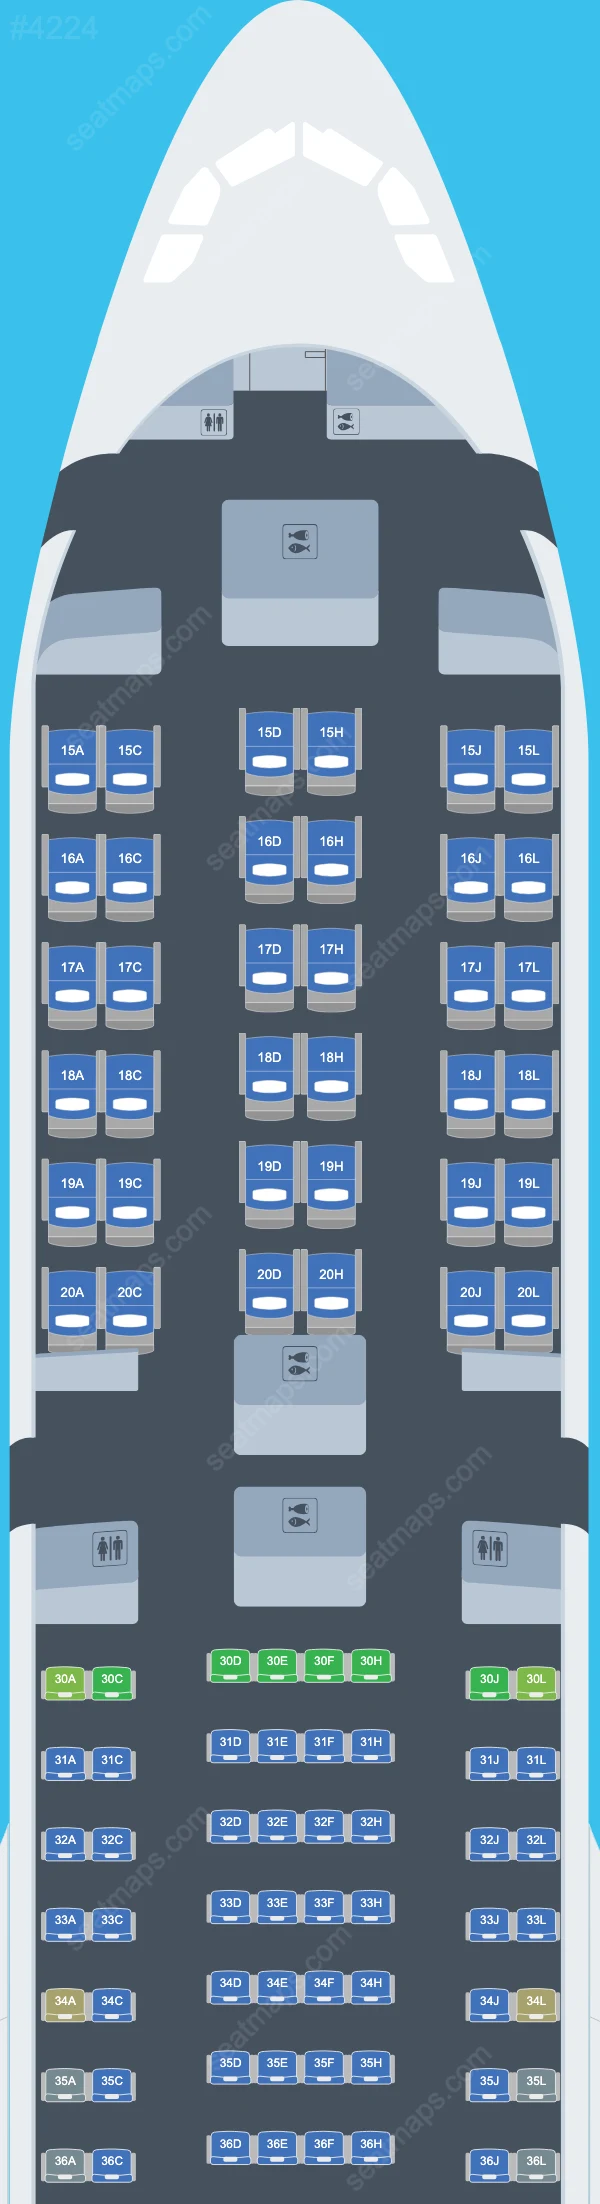 Saudia Airbus A330 Seat Maps A330-300 V.3